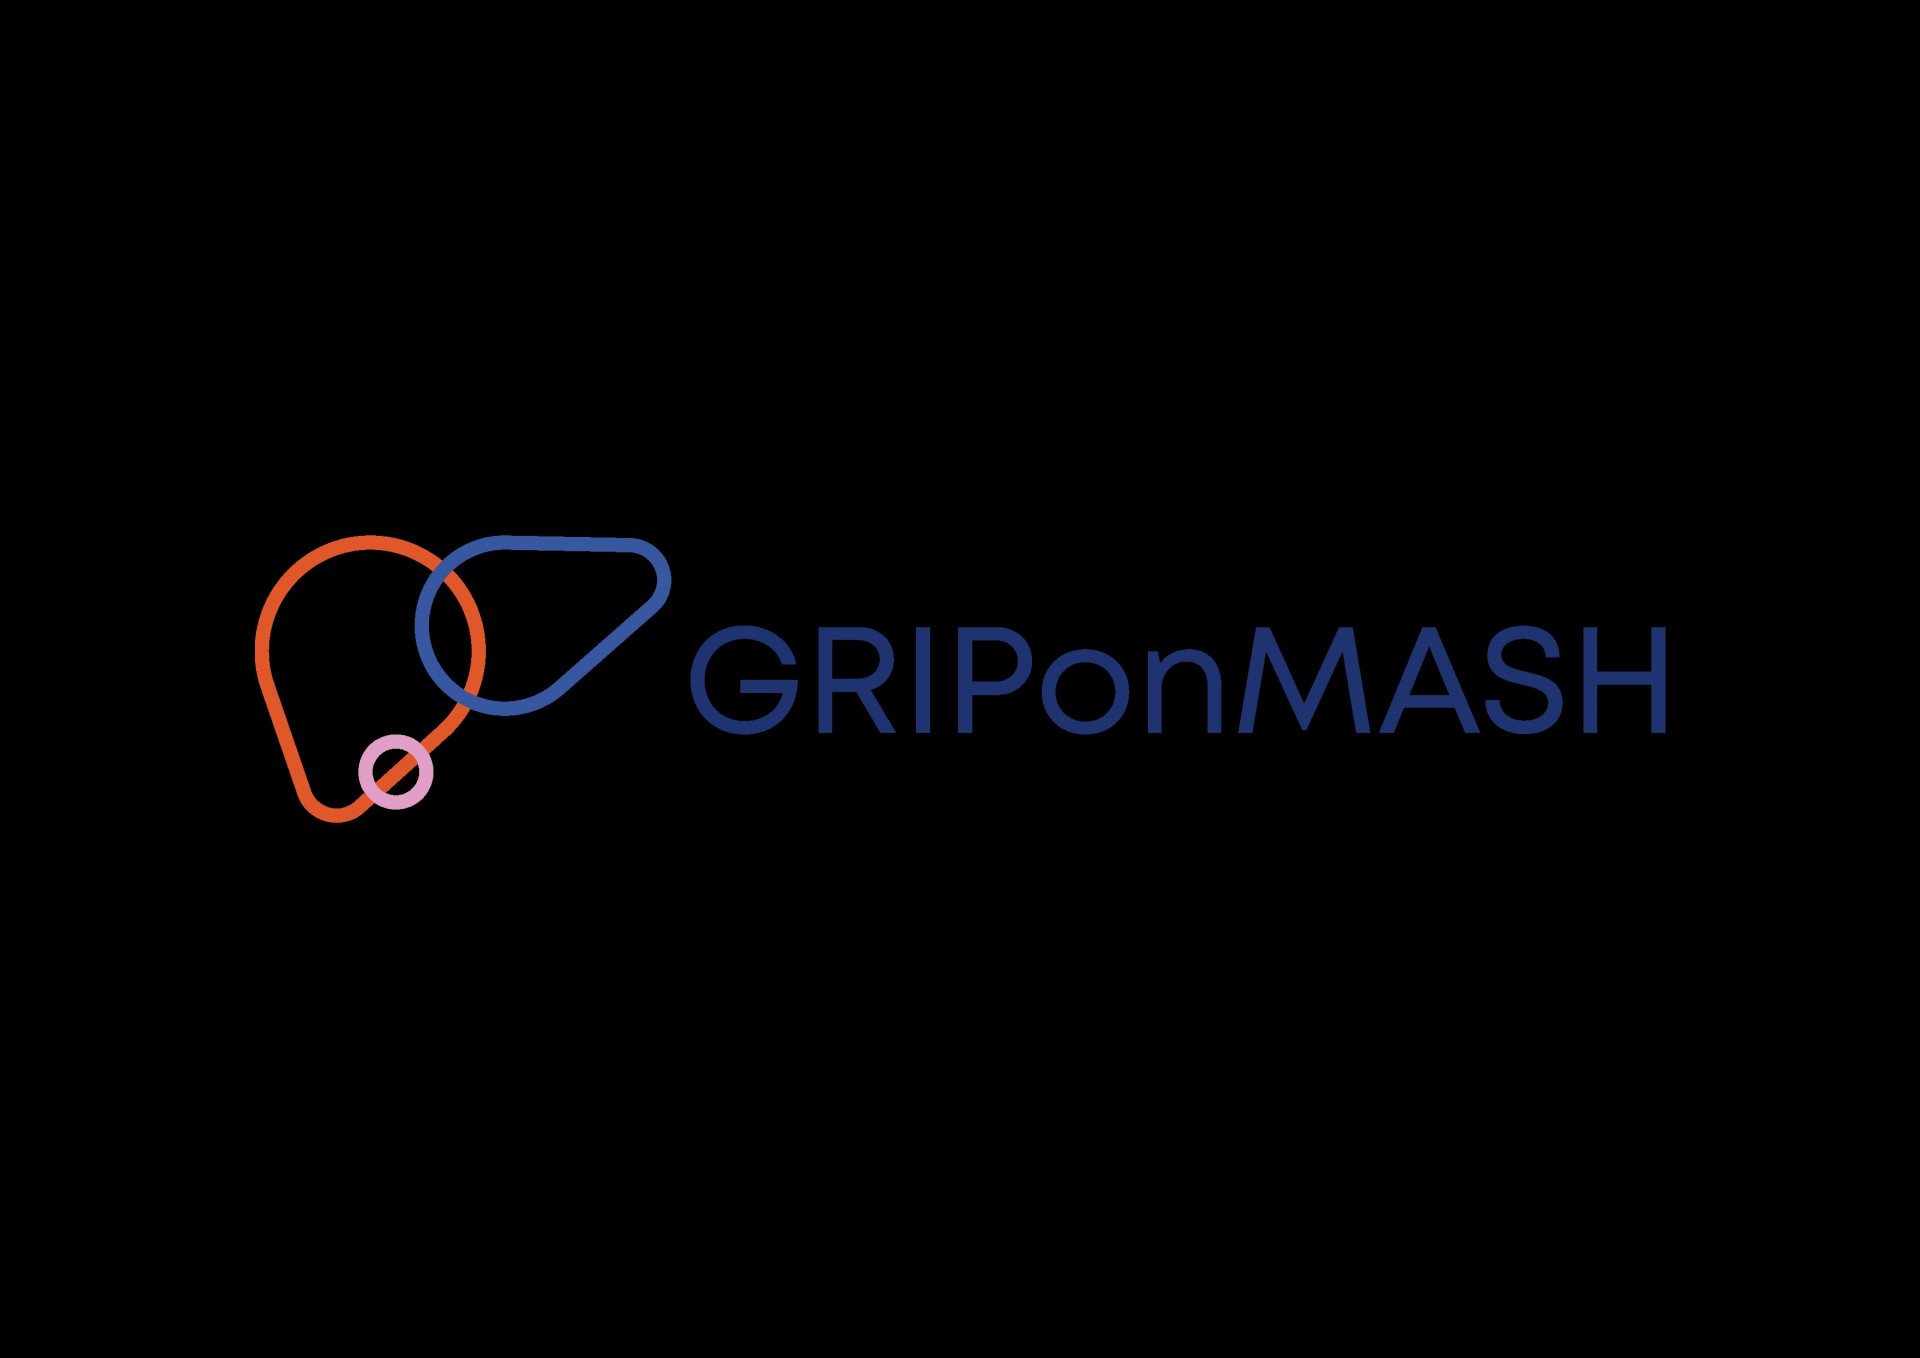 logotipo de um consórcio europeu da área da saúde: GRIPonMASH